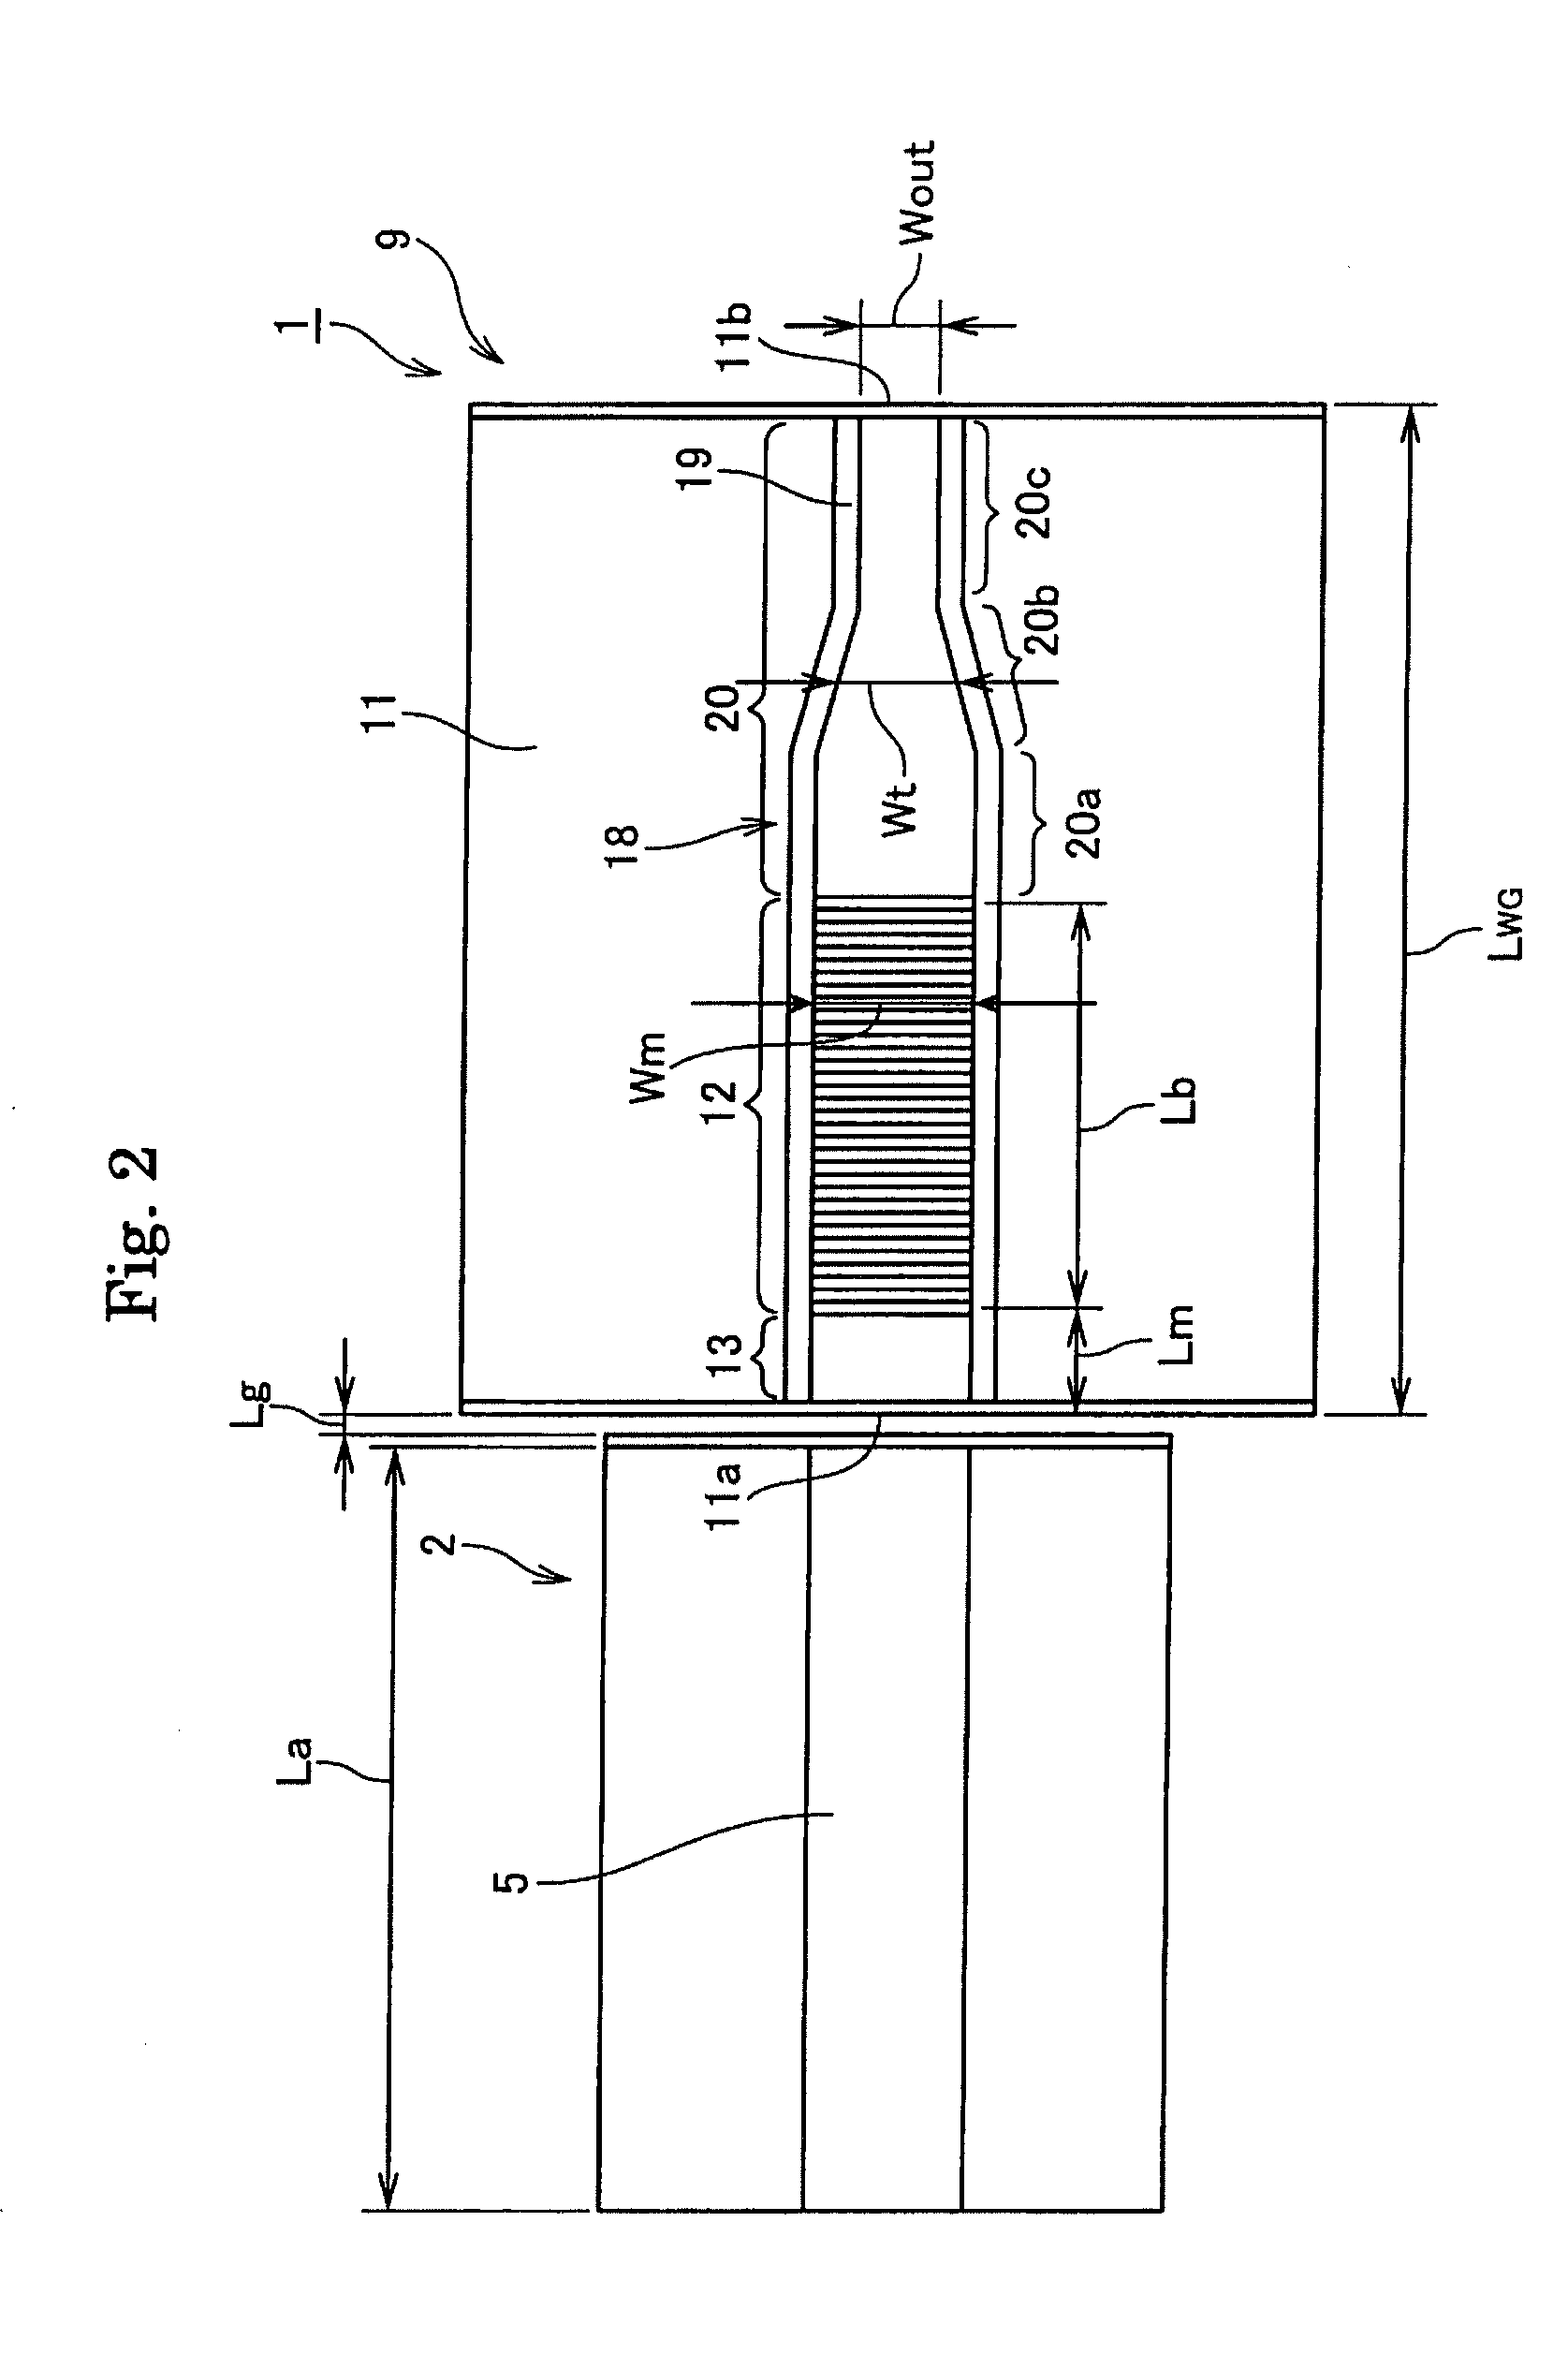 External resonator type light emitting device